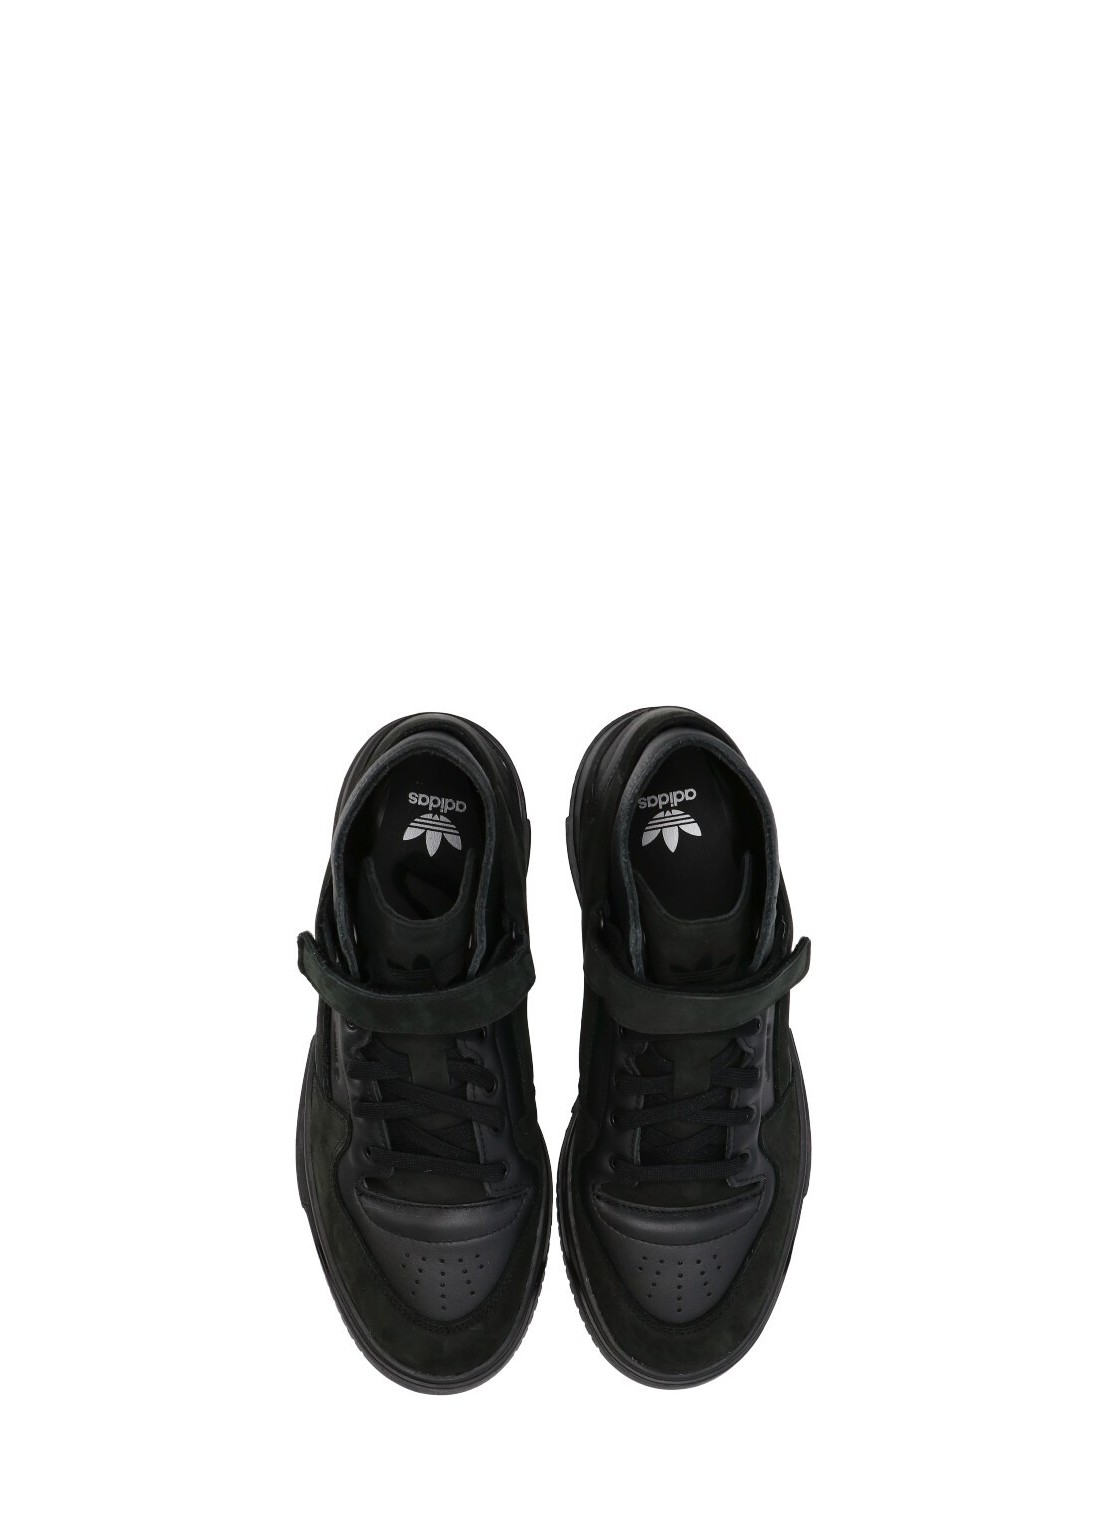 adidas sneaker man forum premiere gy5799 cblack cblack cwhite Talla 41 ...